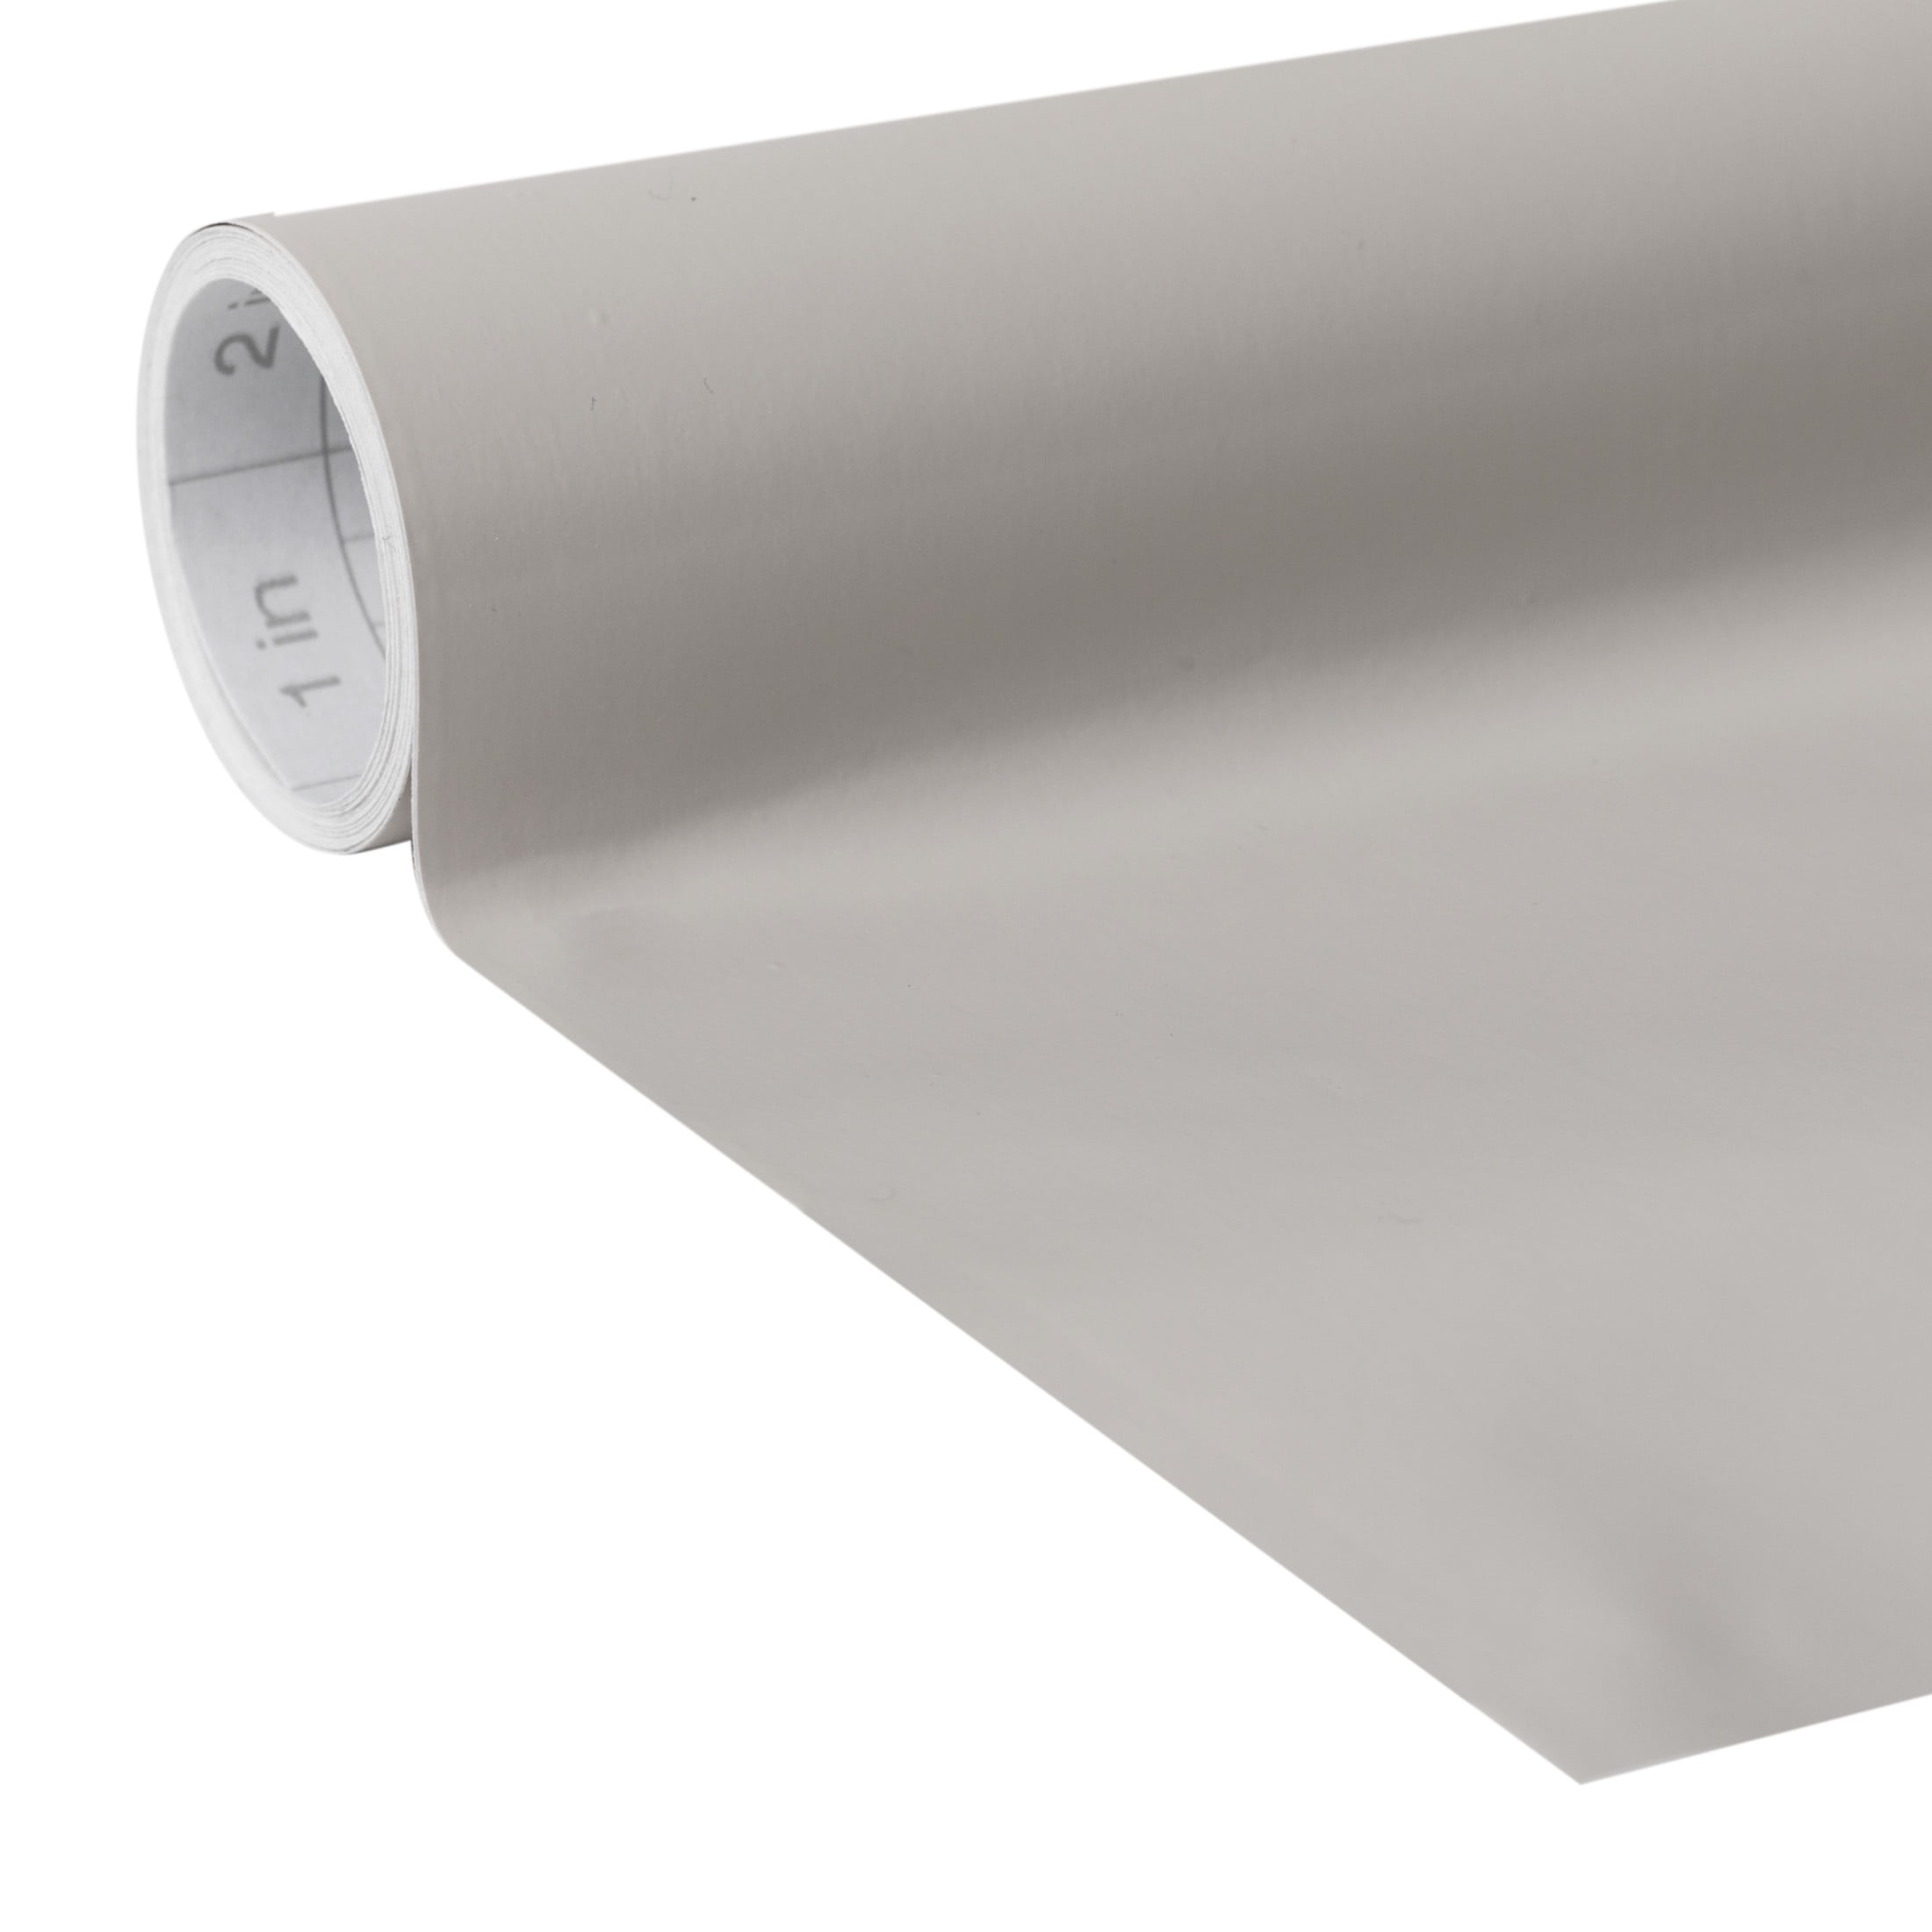 EasyLiner® Adhesive Prints Shelf Liner - Gray Quatrefoil, 20 in. x 15 ft.